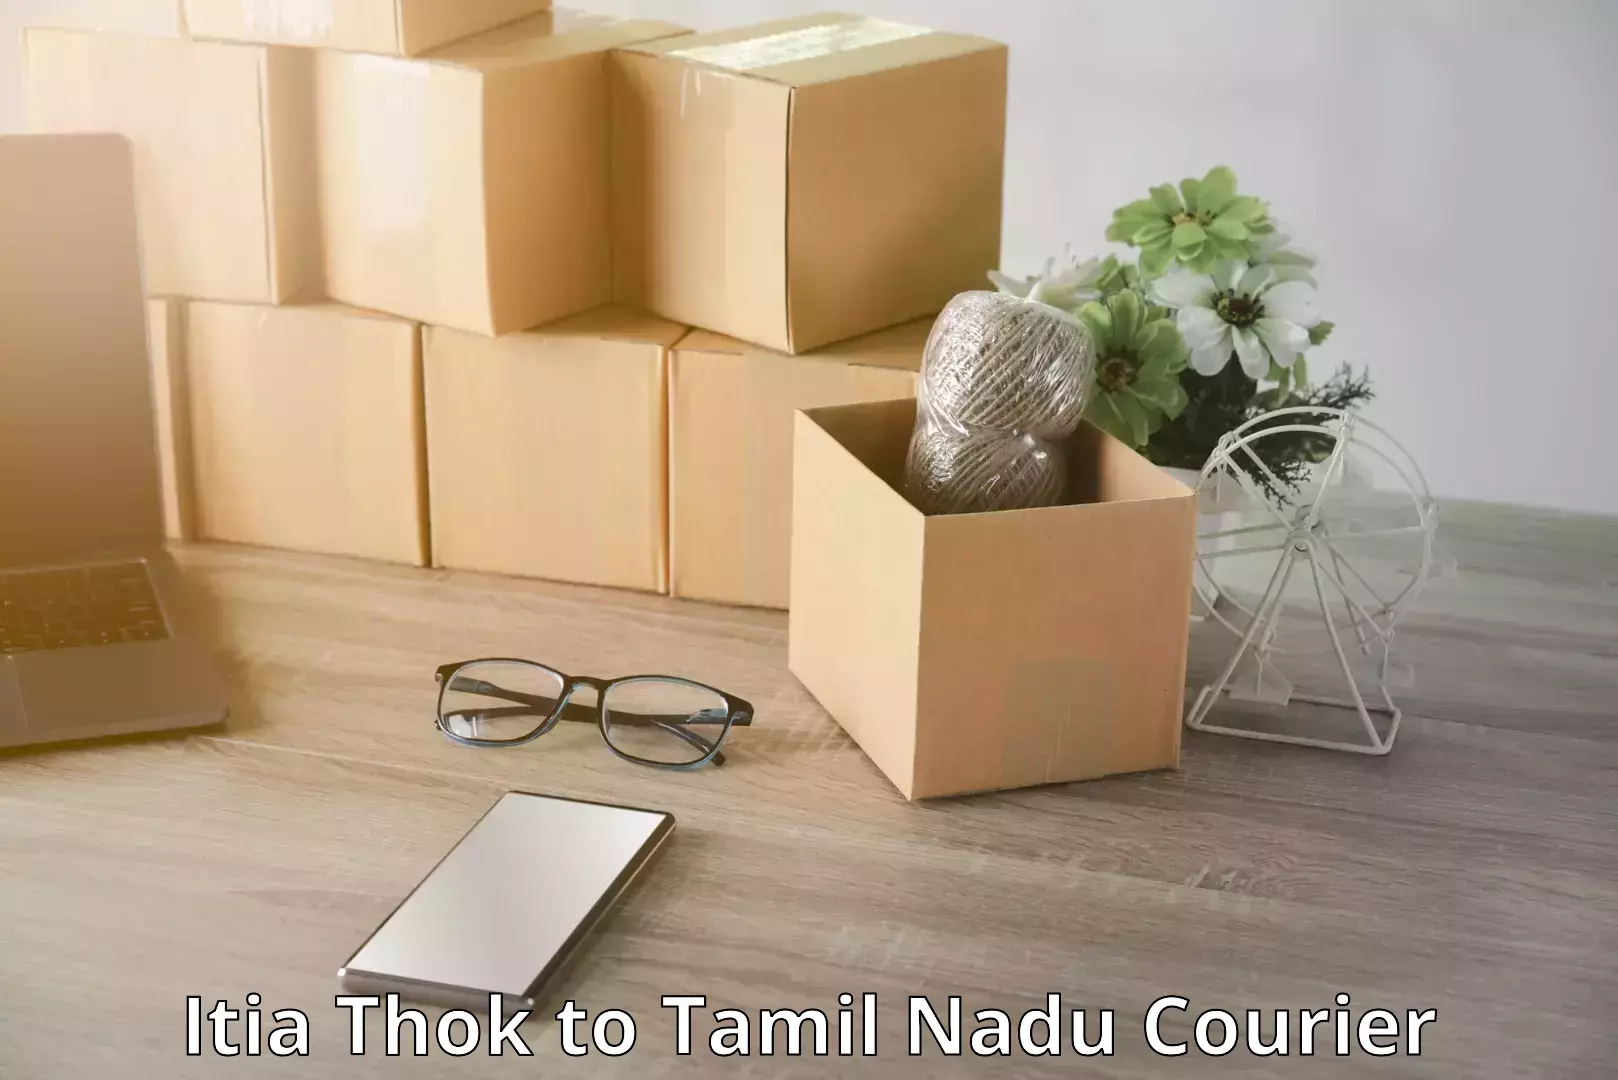 Doorstep luggage collection Itia Thok to Tamil Nadu